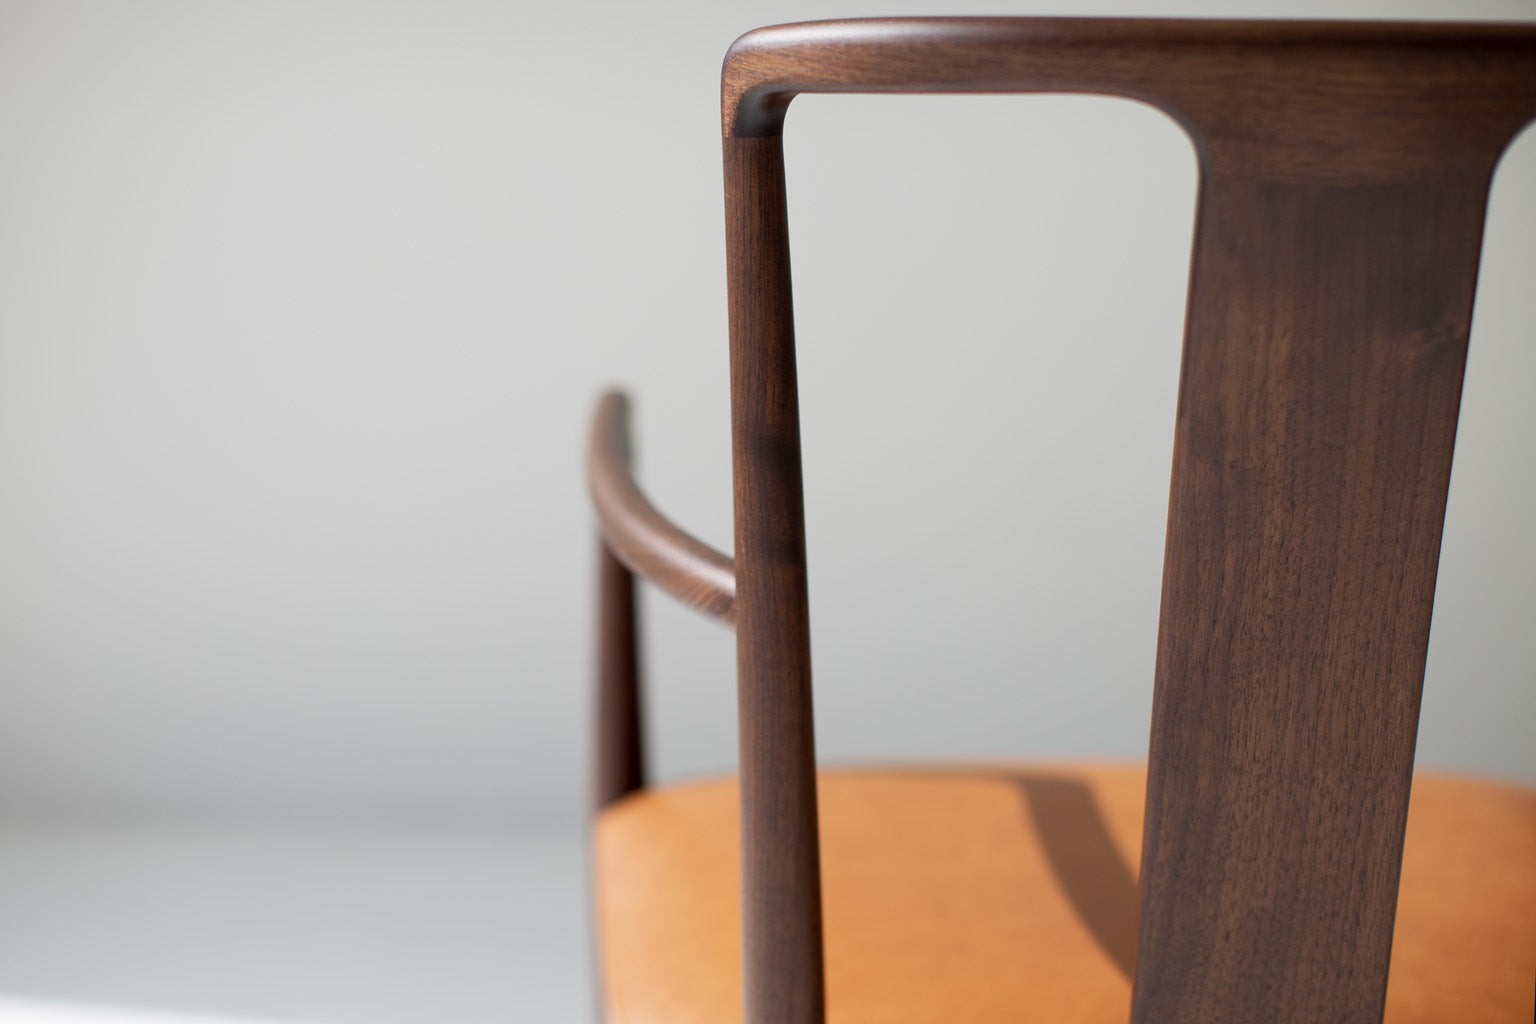 | Derby craft Peabody Arm associates® – Dining Chair | Modern furniture Chair Wood Dining Craft Arm